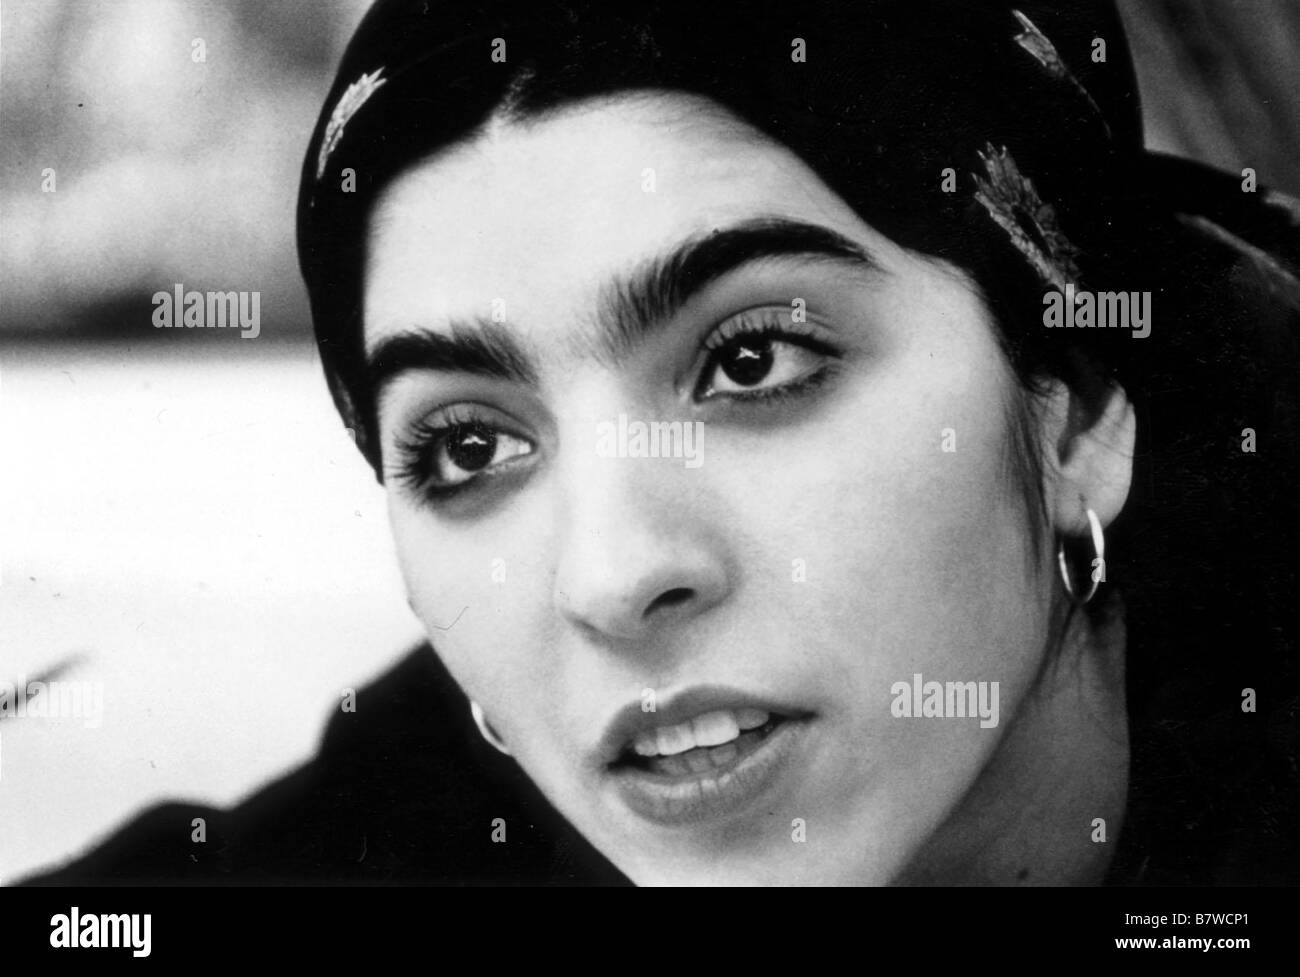 Samira makhmalbaf hi-res stock photography and images - Alamy